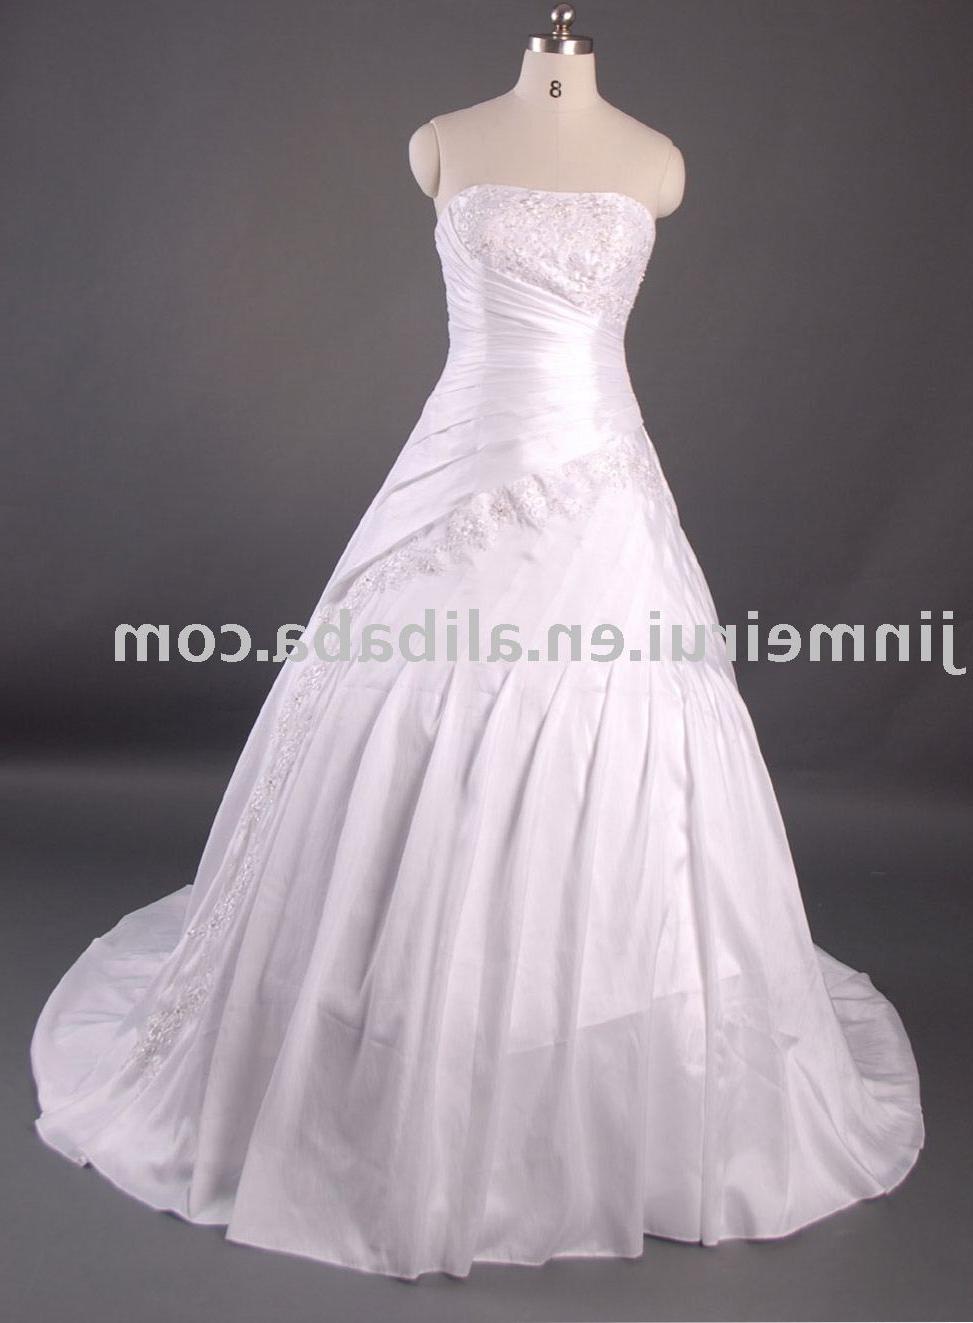 WD-8816 casual wedding dress tea length wedding dress, lace wedding dressJR-